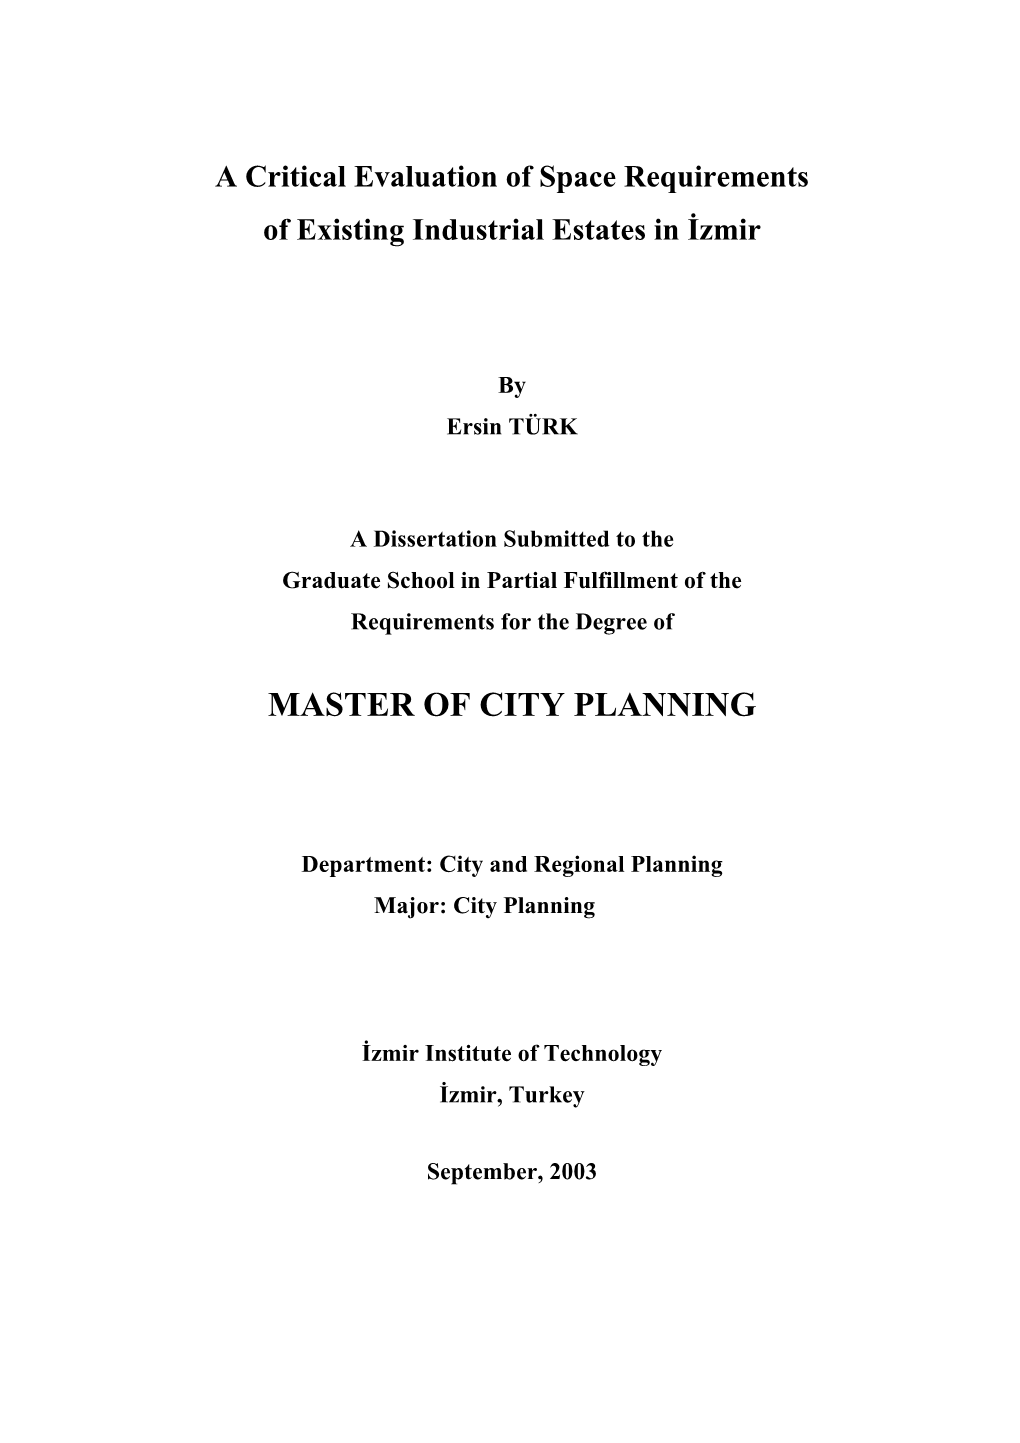 Master of City Planning